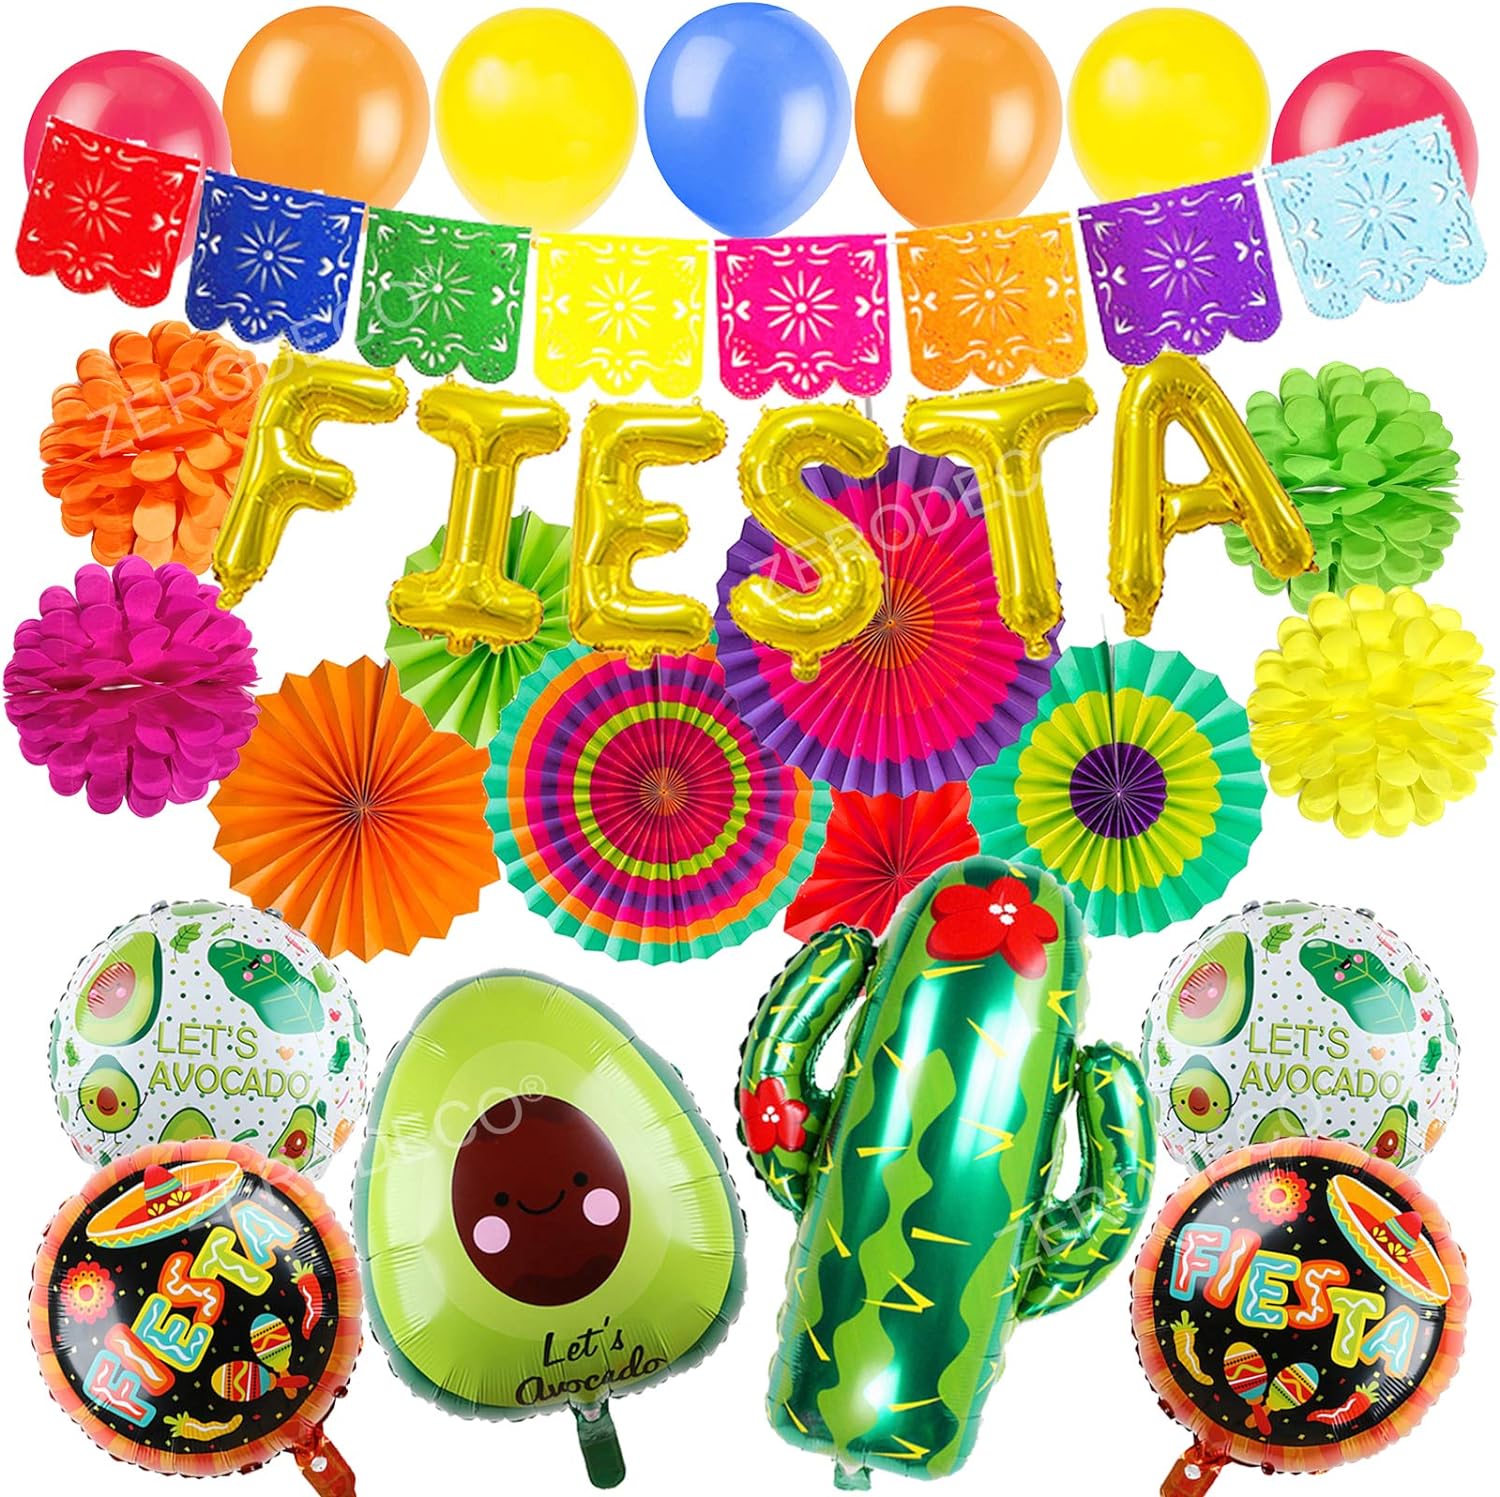 ZERODECO Fiesta Party Supplies, Multicolor Picado Banner Fiesta Cactus Avocado Foil Balloons Paper Fan Pompoms Bunting Banner for Fiesta Mexican Cinco De Mayo Frida Kahlo Party Decorations